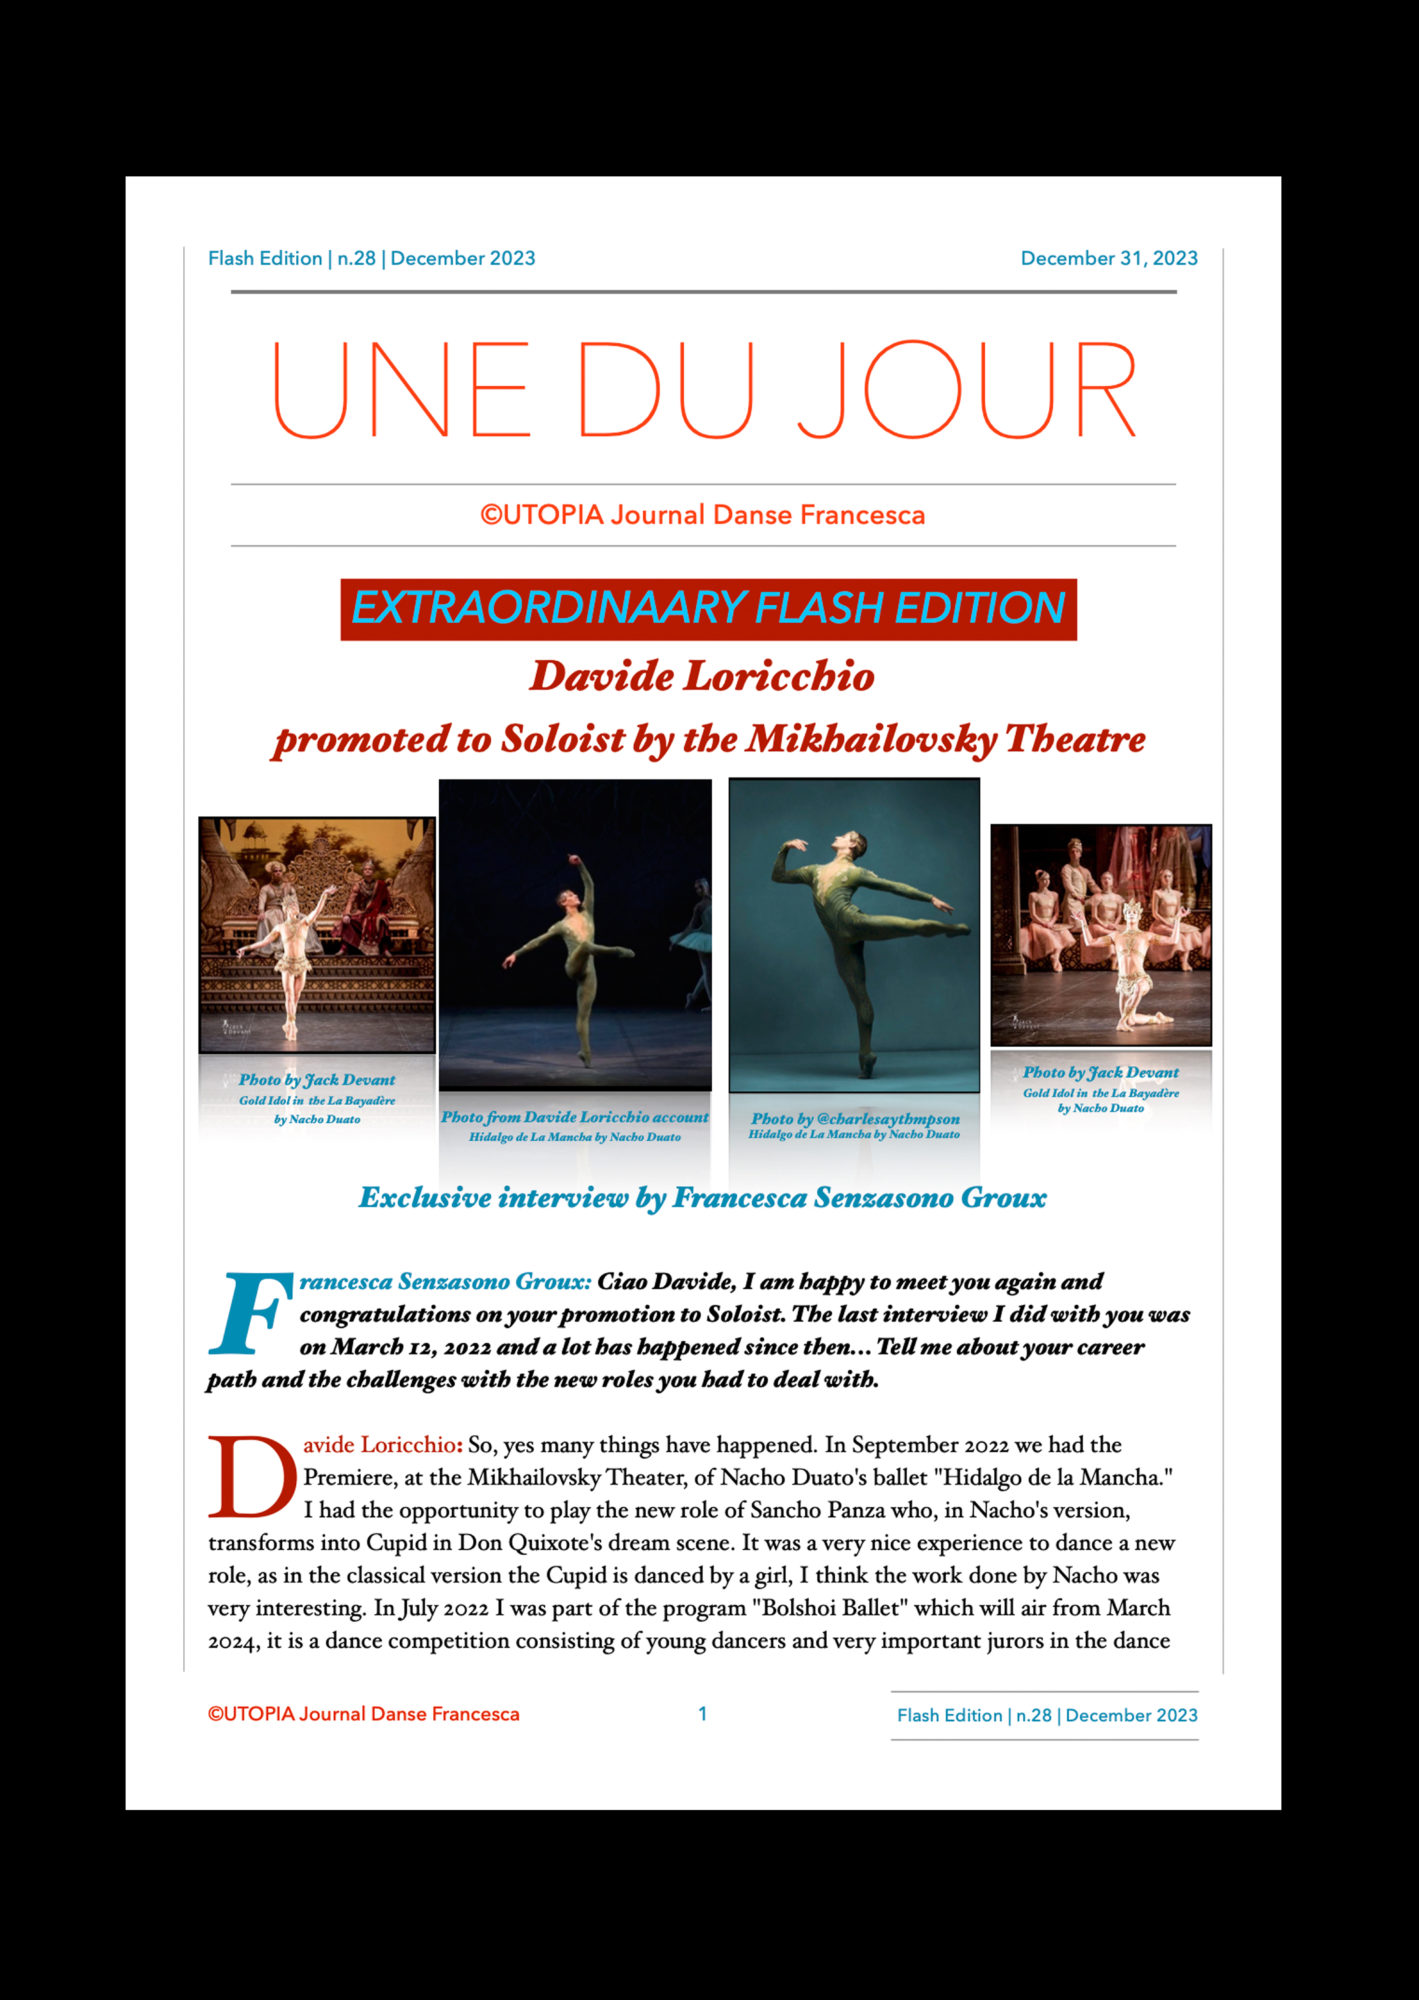 ©UTOPIA Journal Danse Francesca Extraordinary Flash Edition n.28 December 31, 2023 page 1